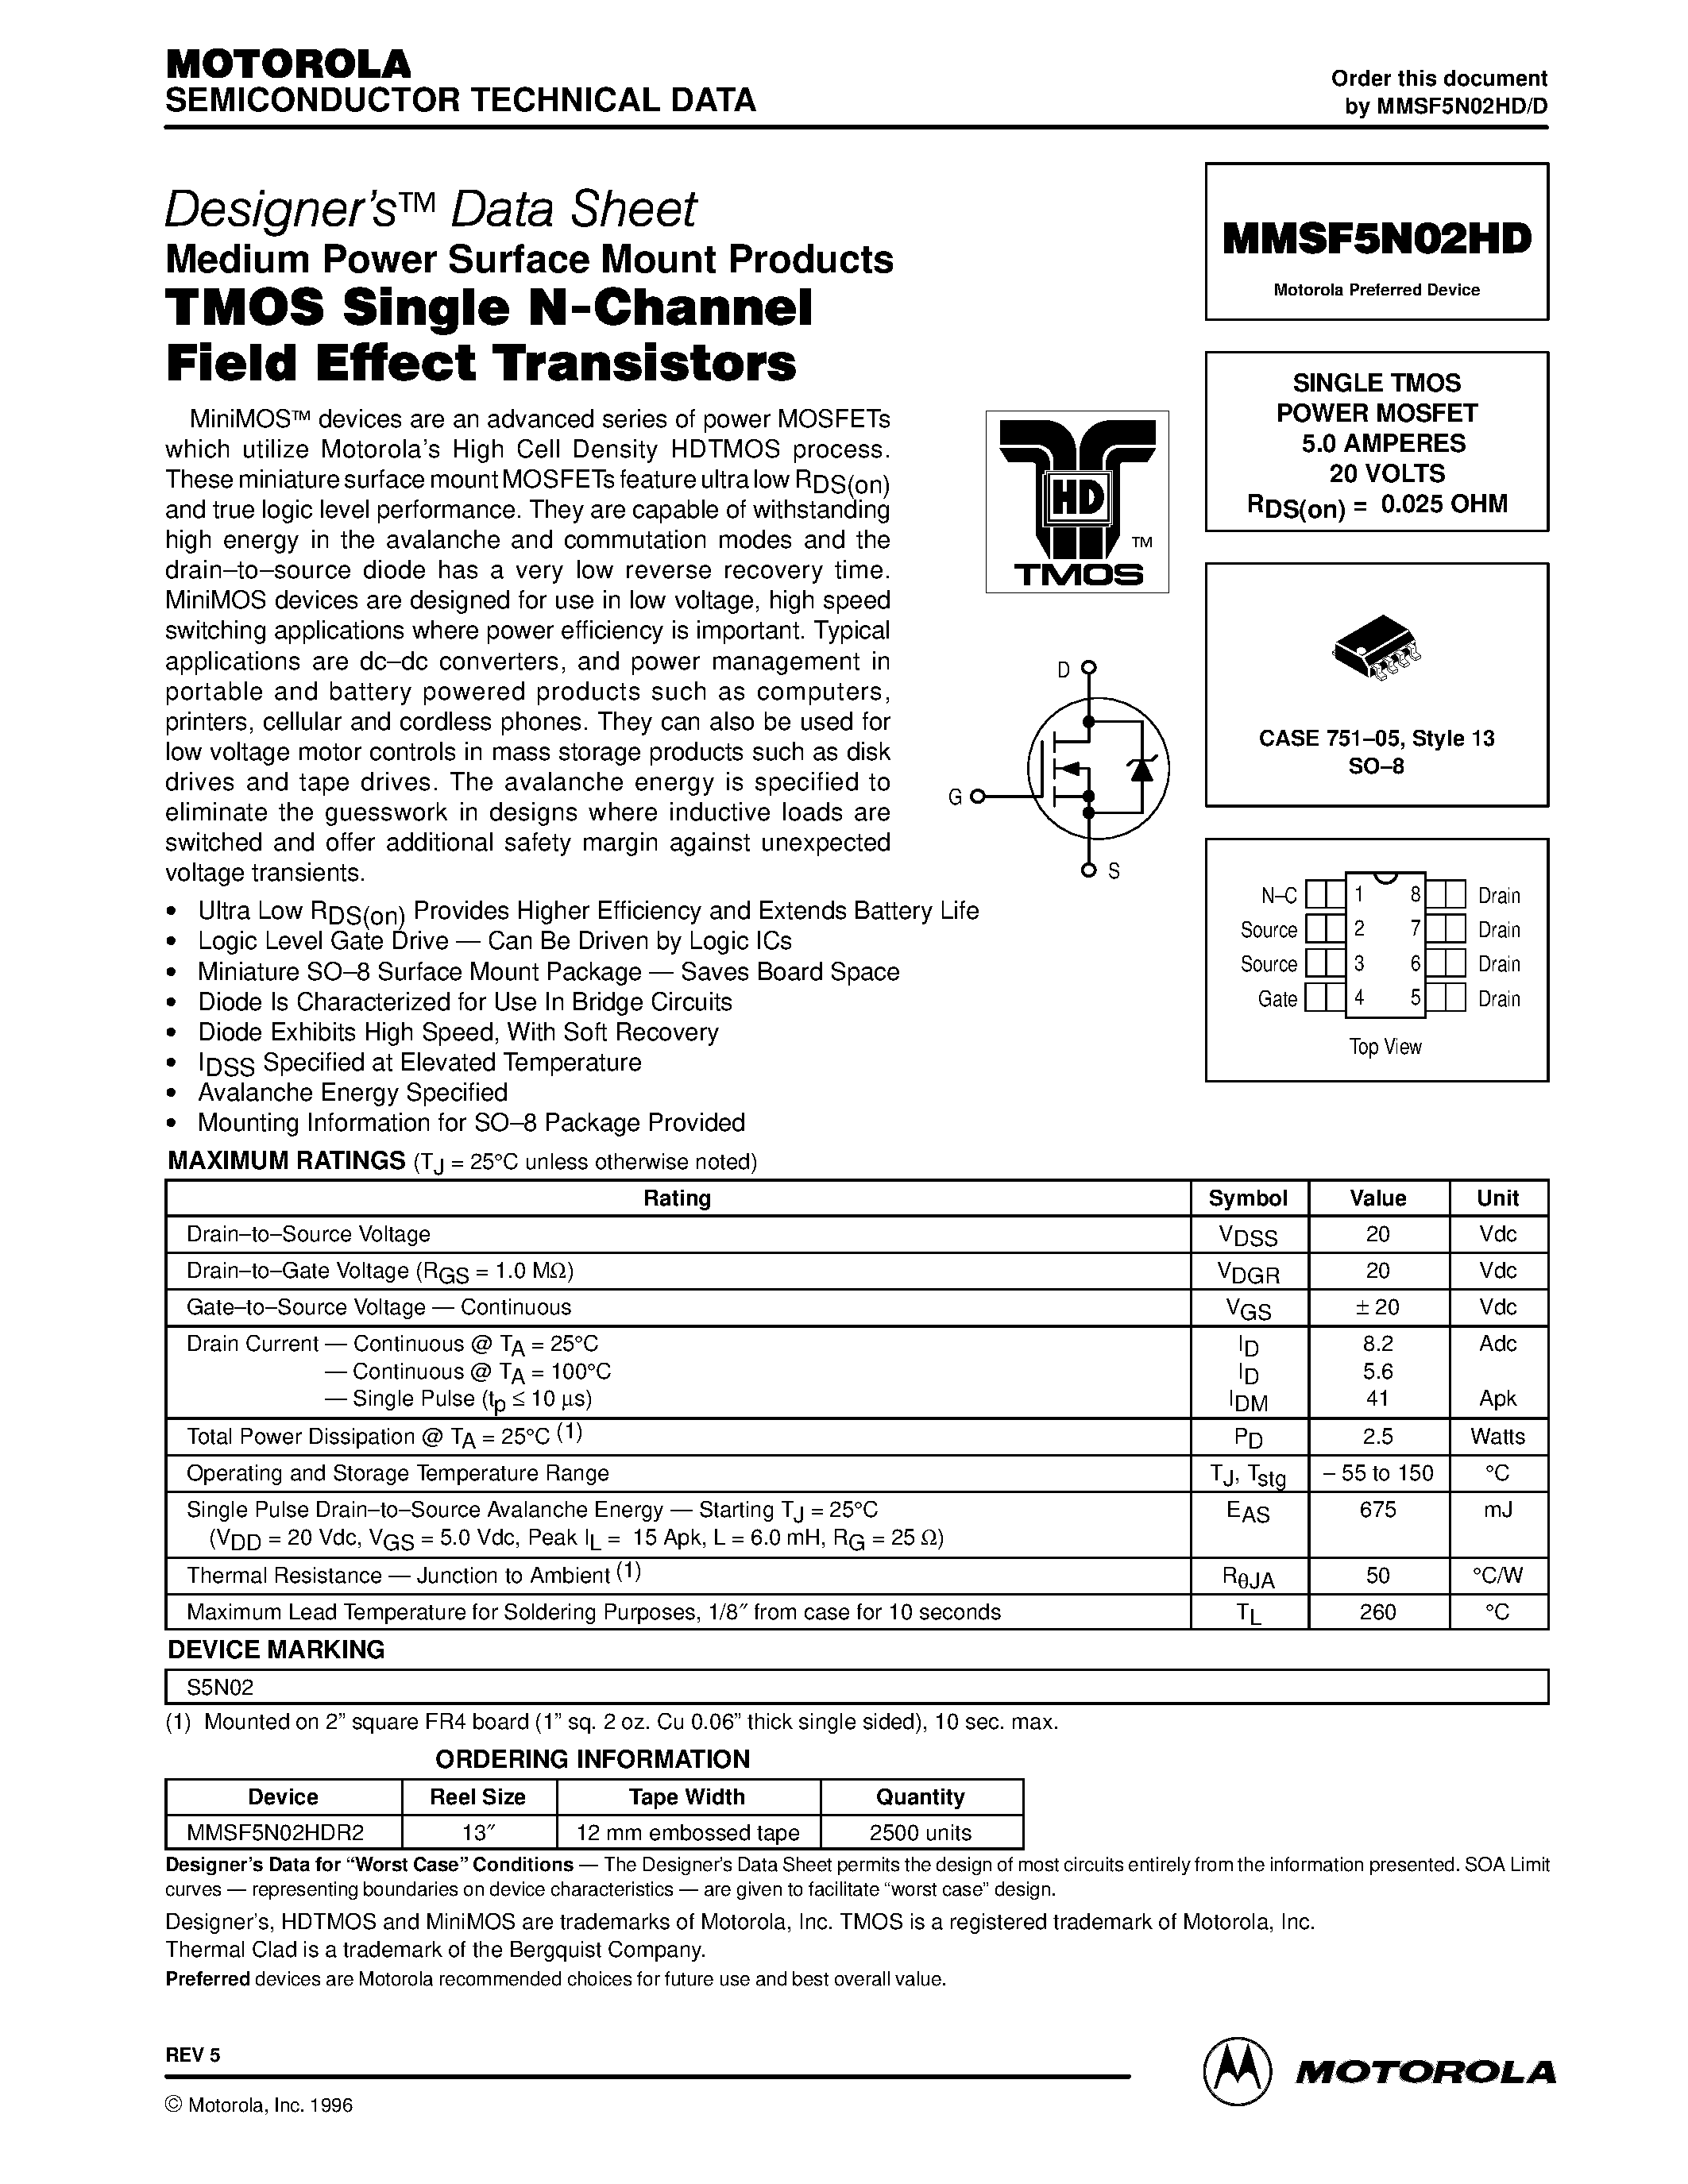 Datasheet MMSF5N02HD - SINGLE TMOS POWER MOSFET 5.0 AMPERES 20 VOLTS page 1